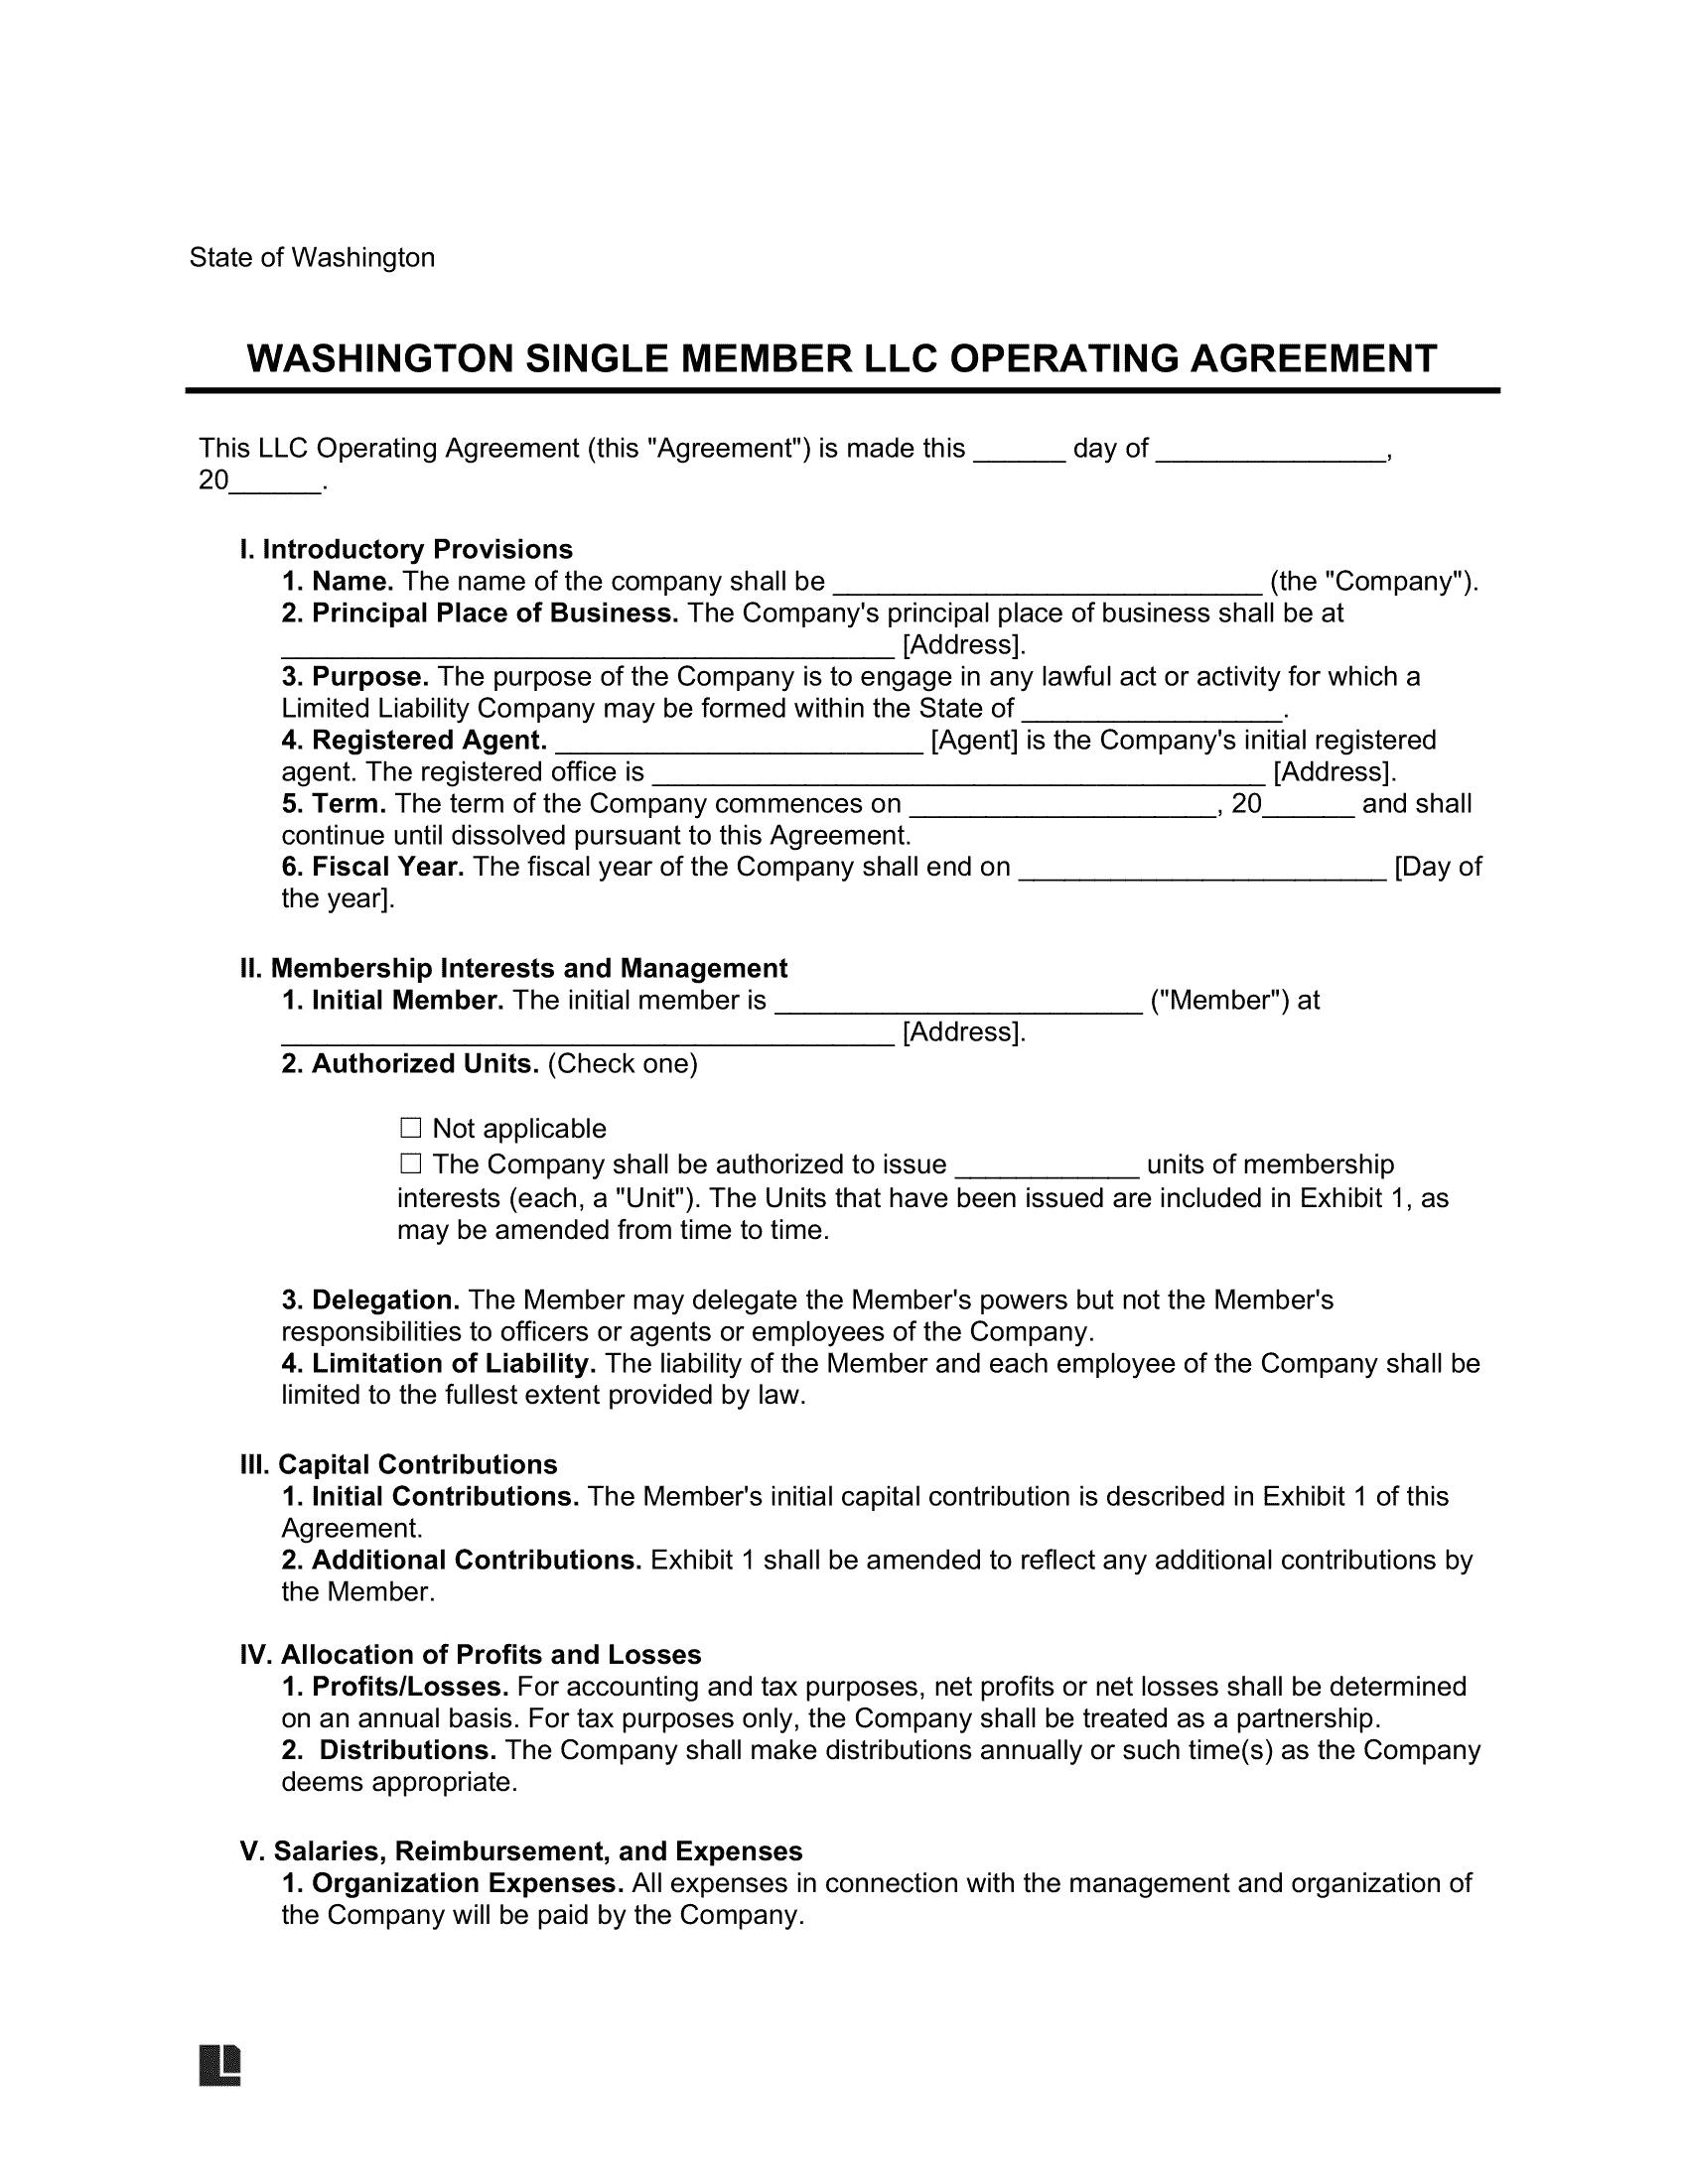 Washington Single Member LLC Operating Agreement Form